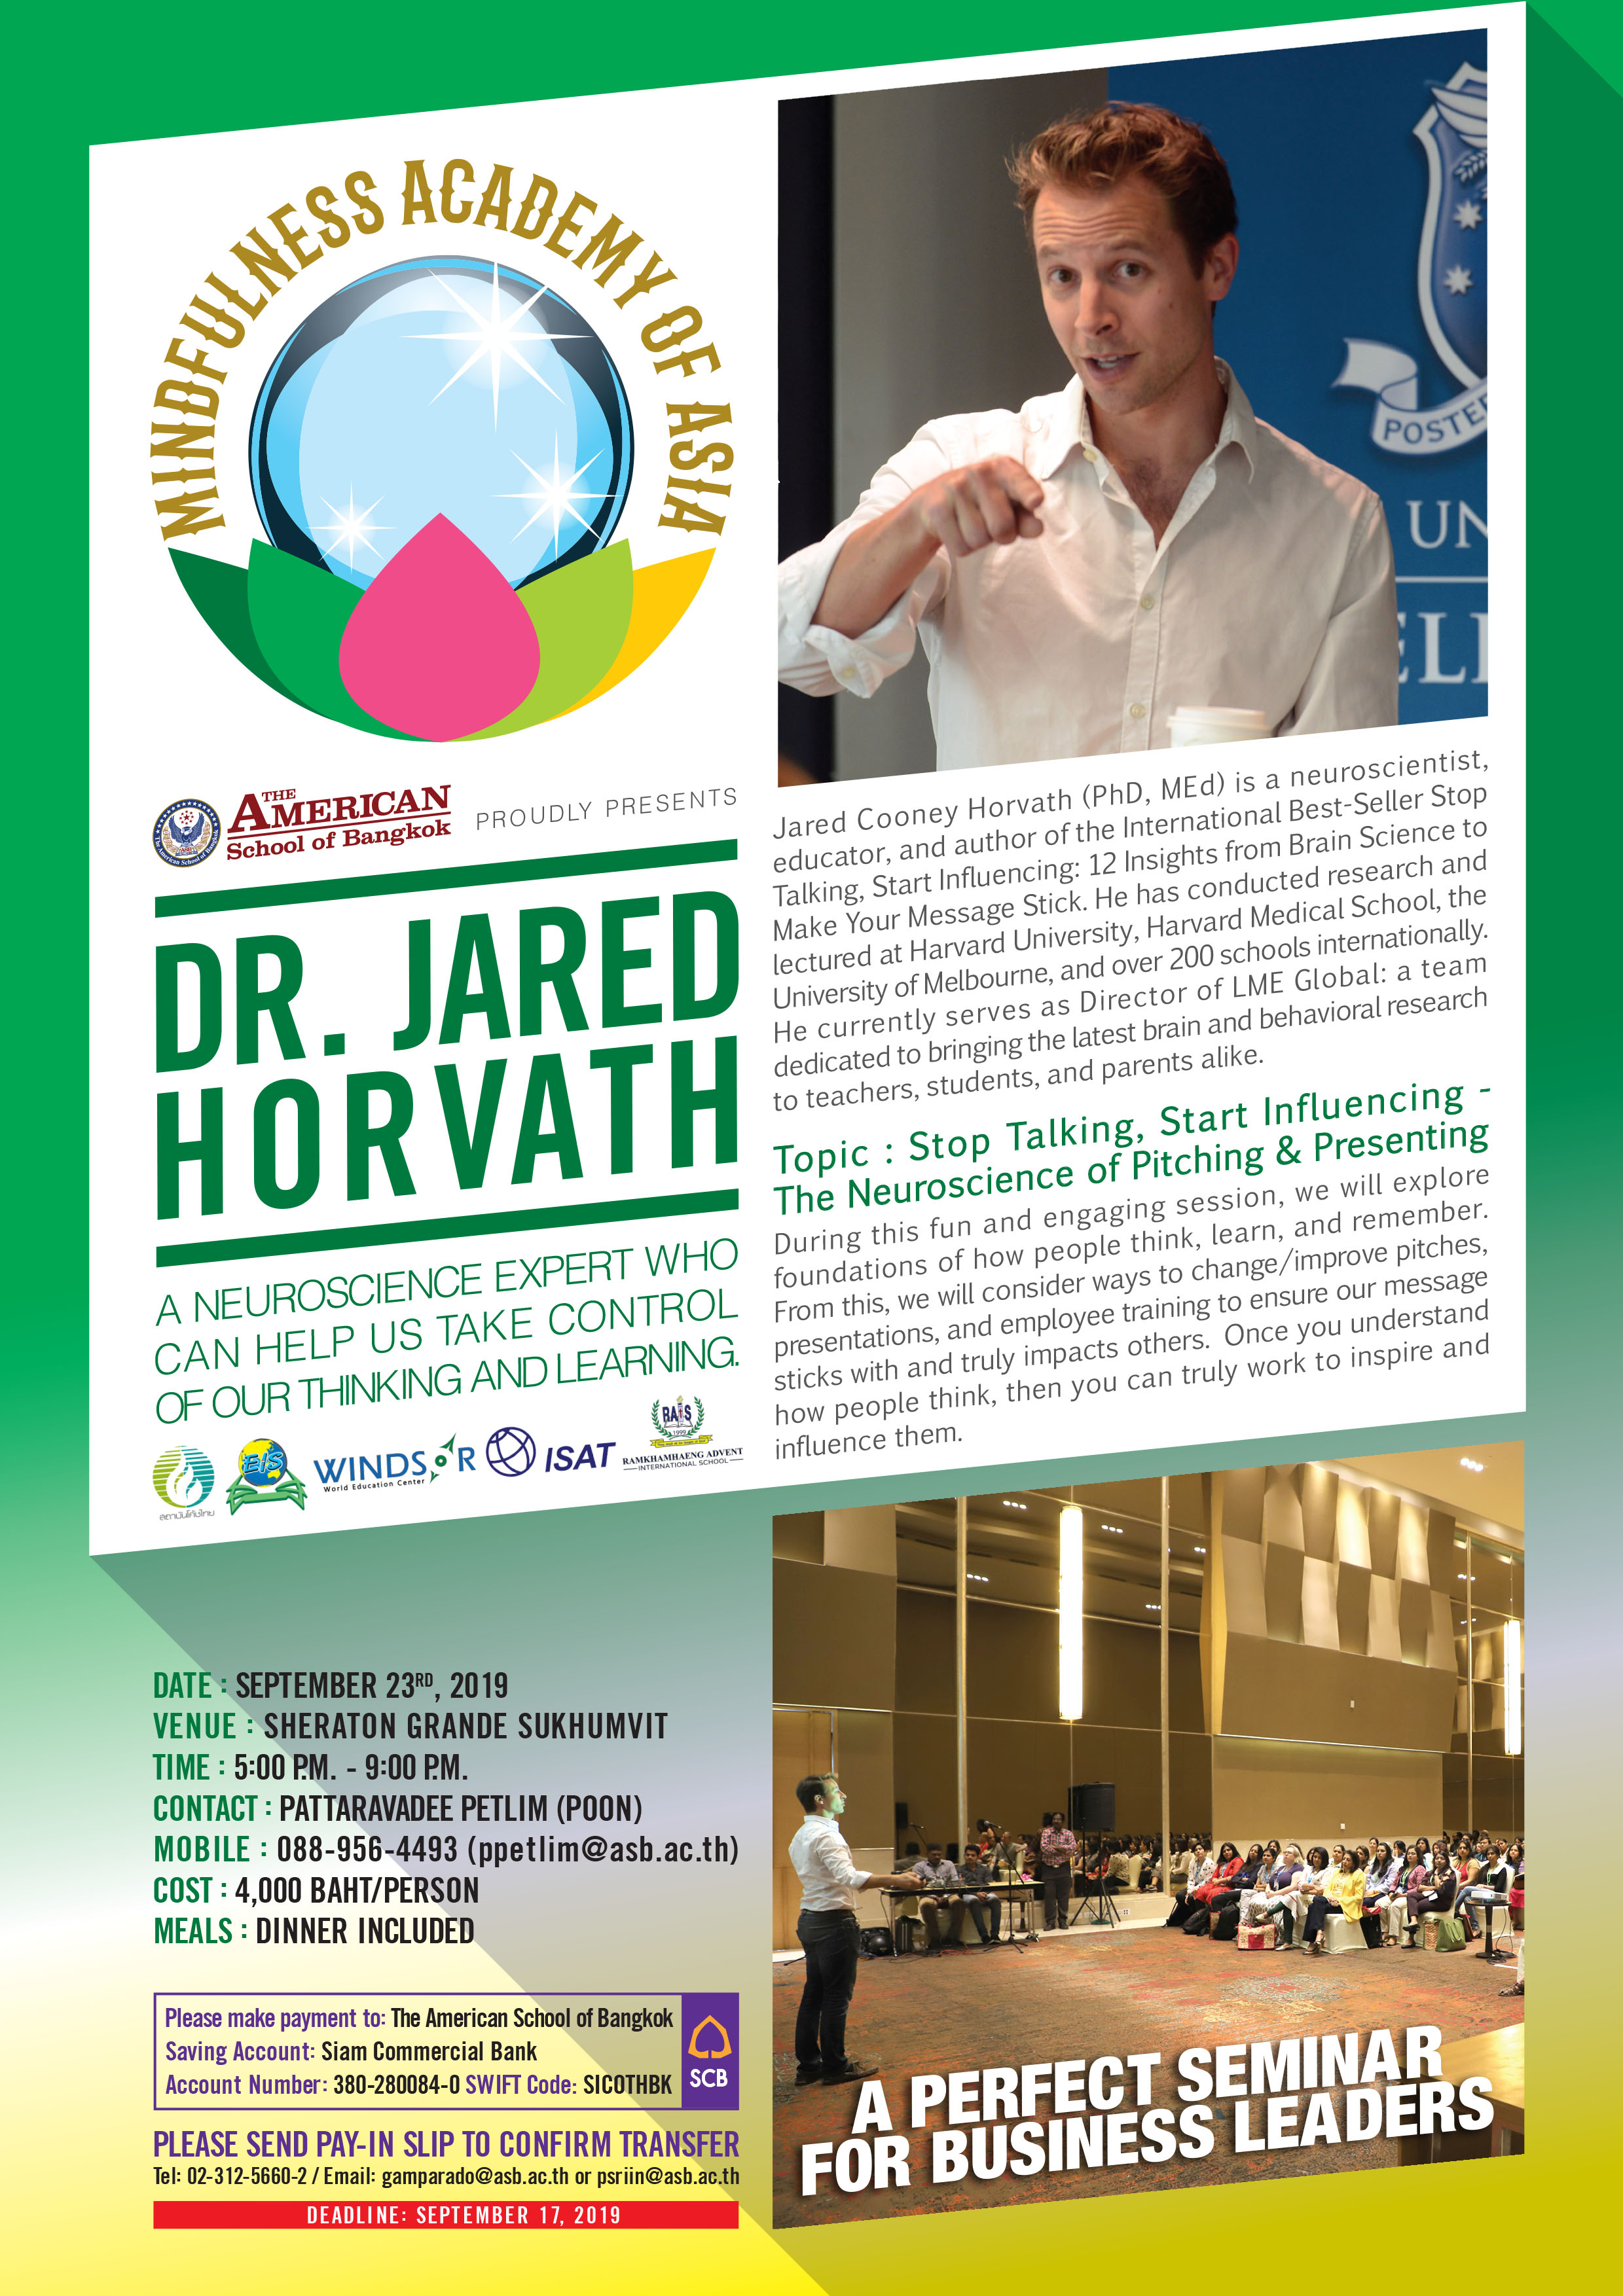 Dr. Jared Horvath Seminar